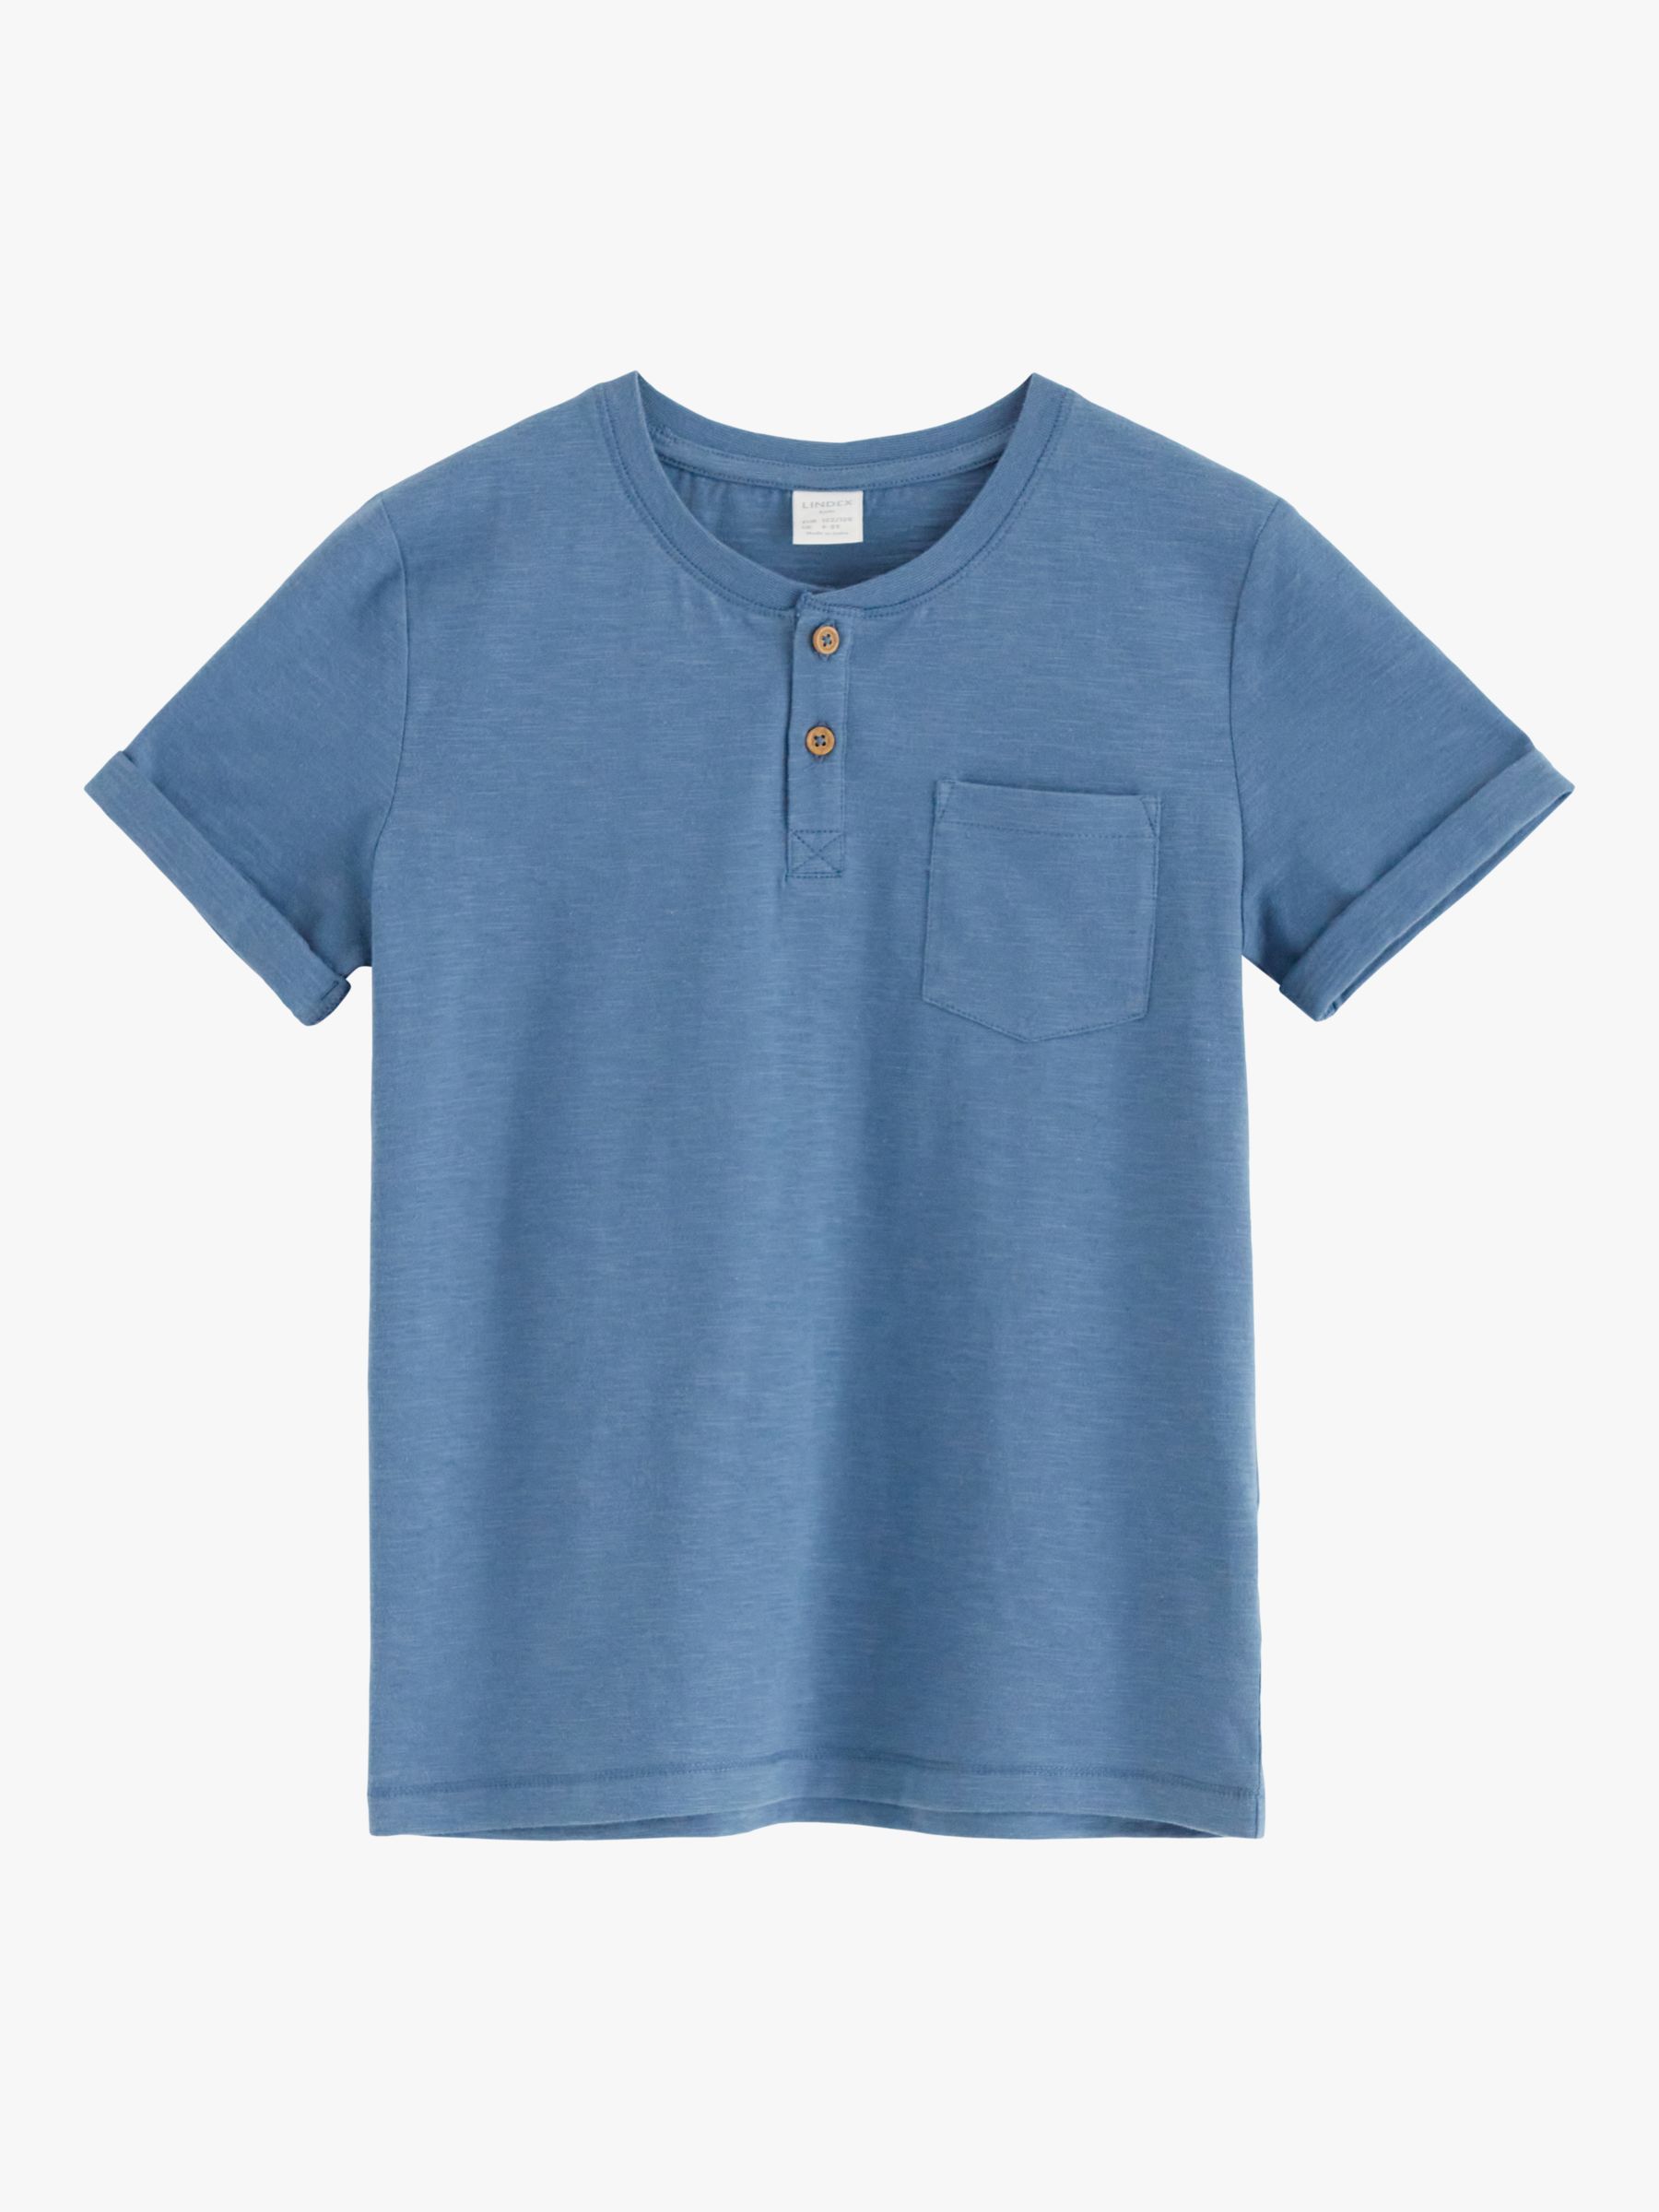 Lindex Kids' Organic Cotton Essential Short Sleeved Button Top, Dusty Blue, 18-24 months